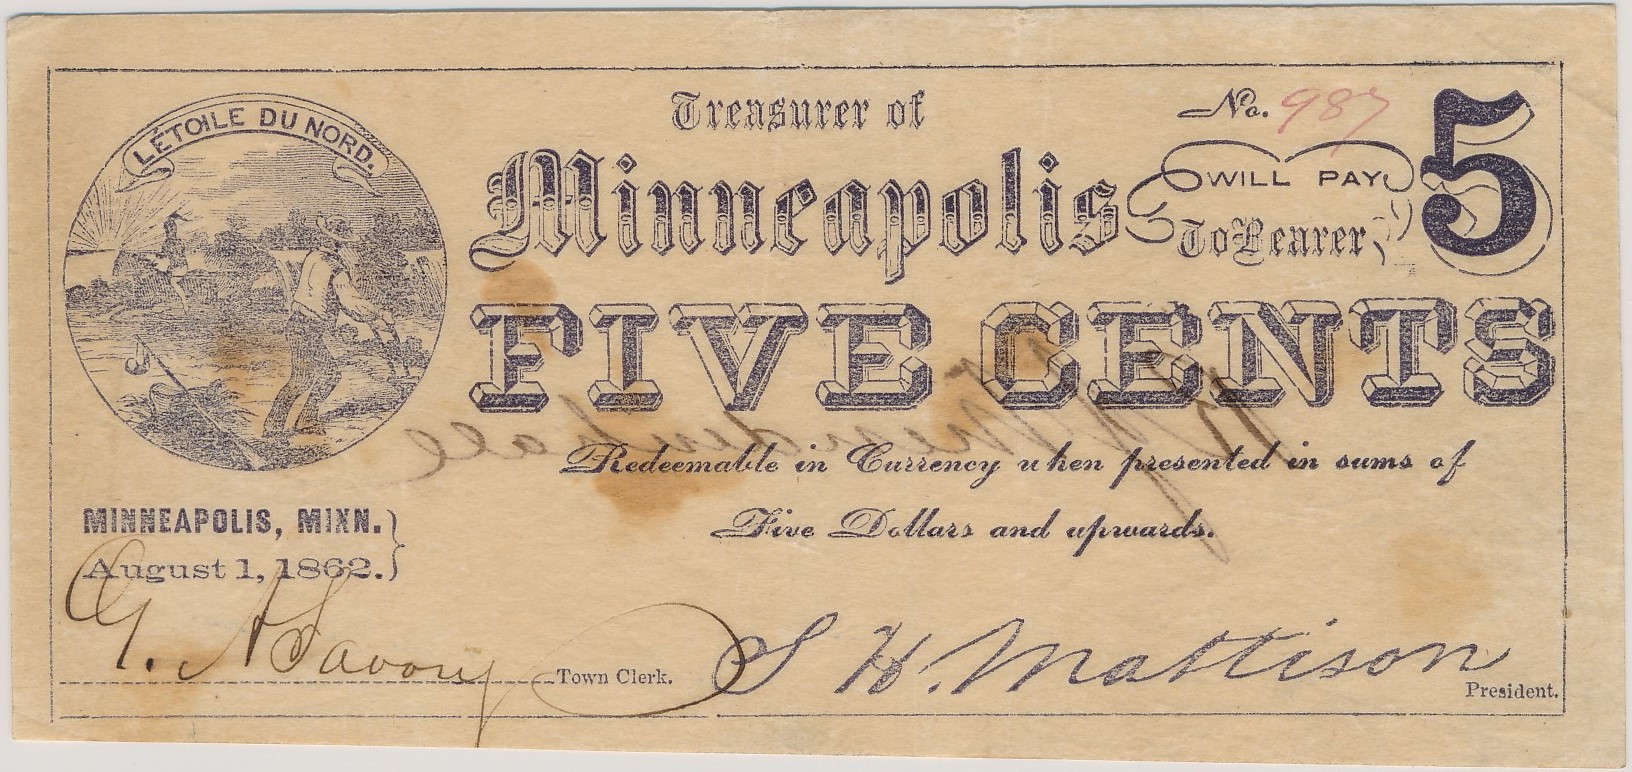 Treasurer of Minneapolis